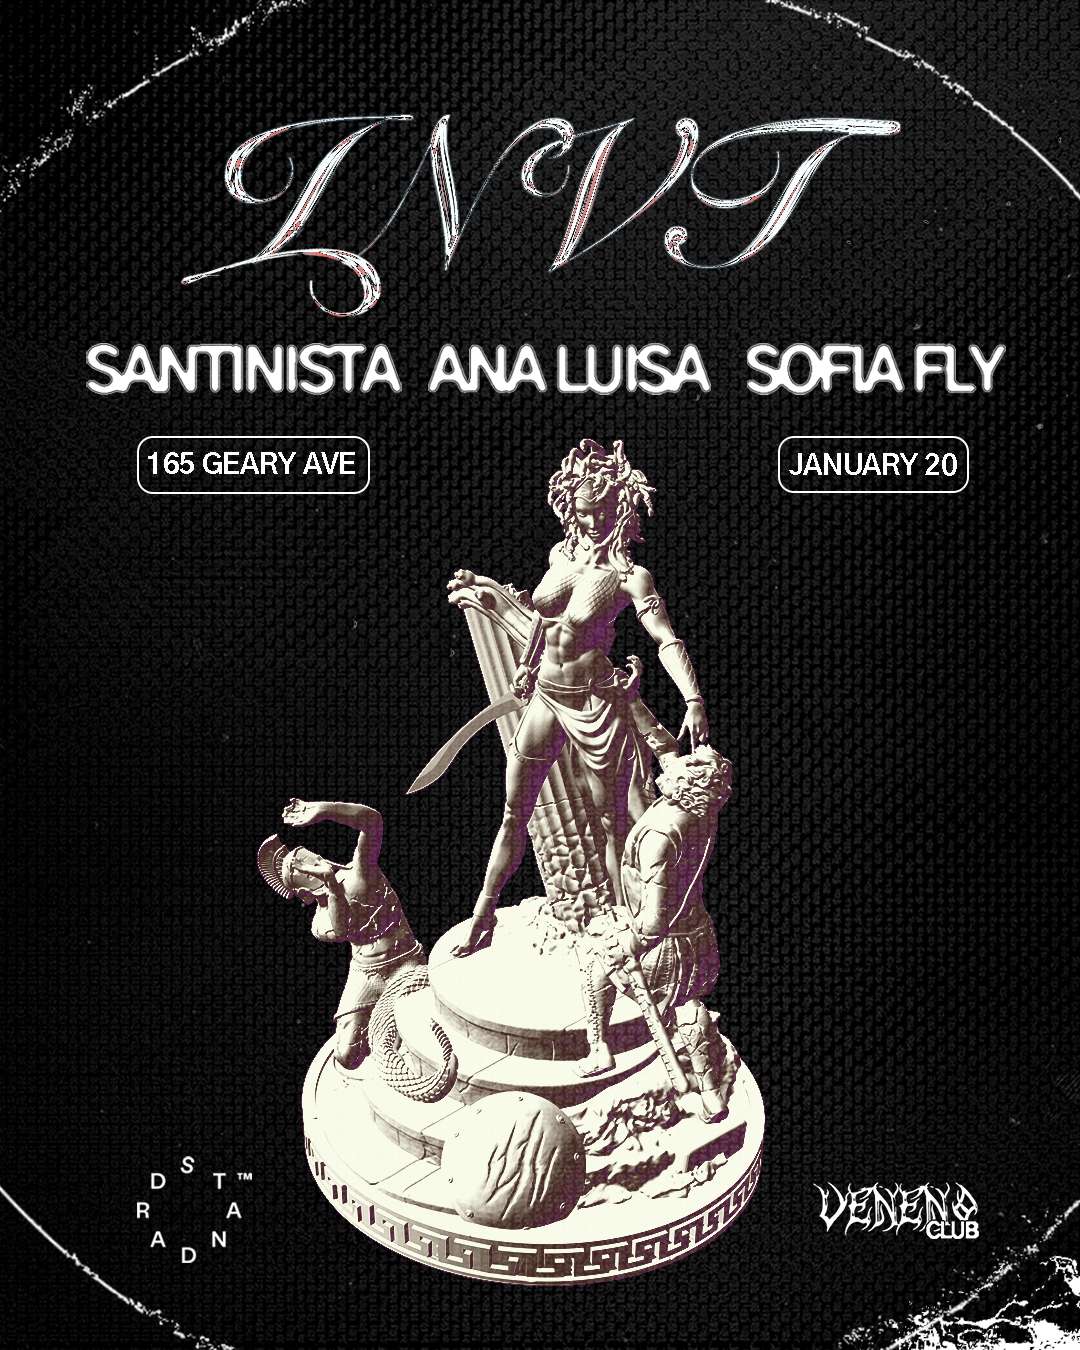 085: VENENO Club x Standard Time presents INVT, santinista, Sofia Fly and ANA LUISA   - フライヤー表